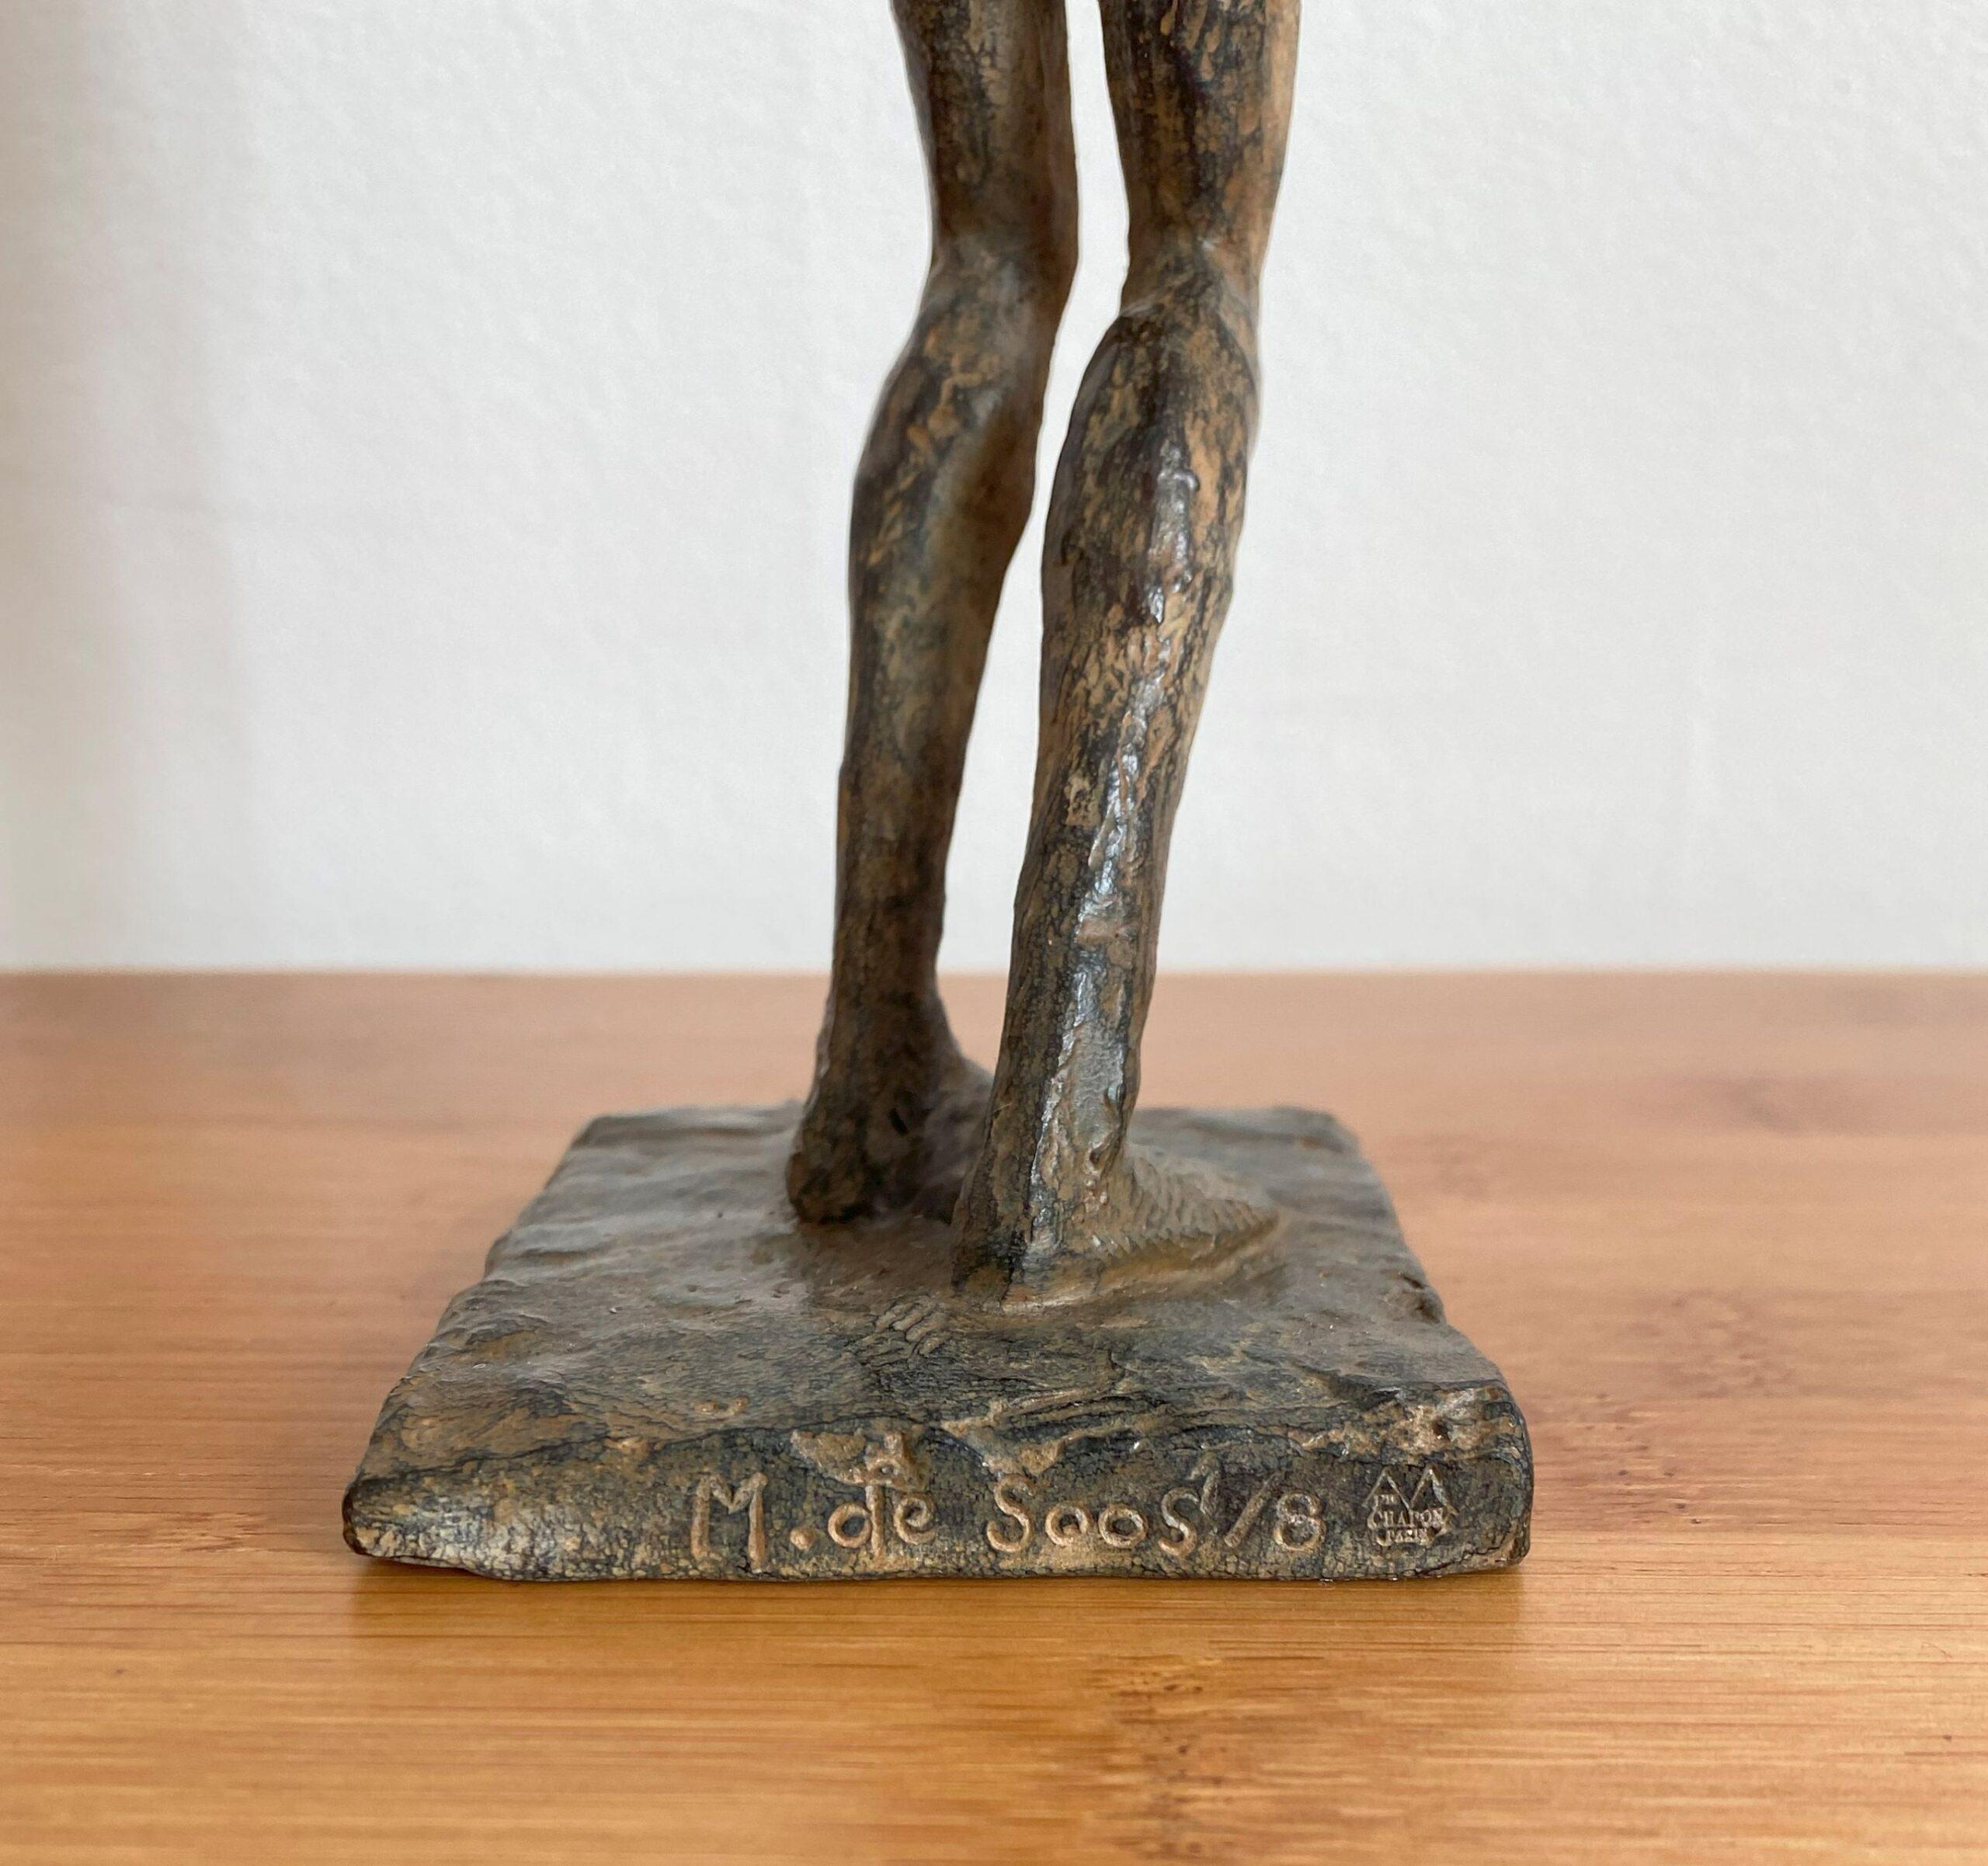 Childhood’s Sail VI by Marine de Soos - Bronze sculpture, child's figure, kite For Sale 8